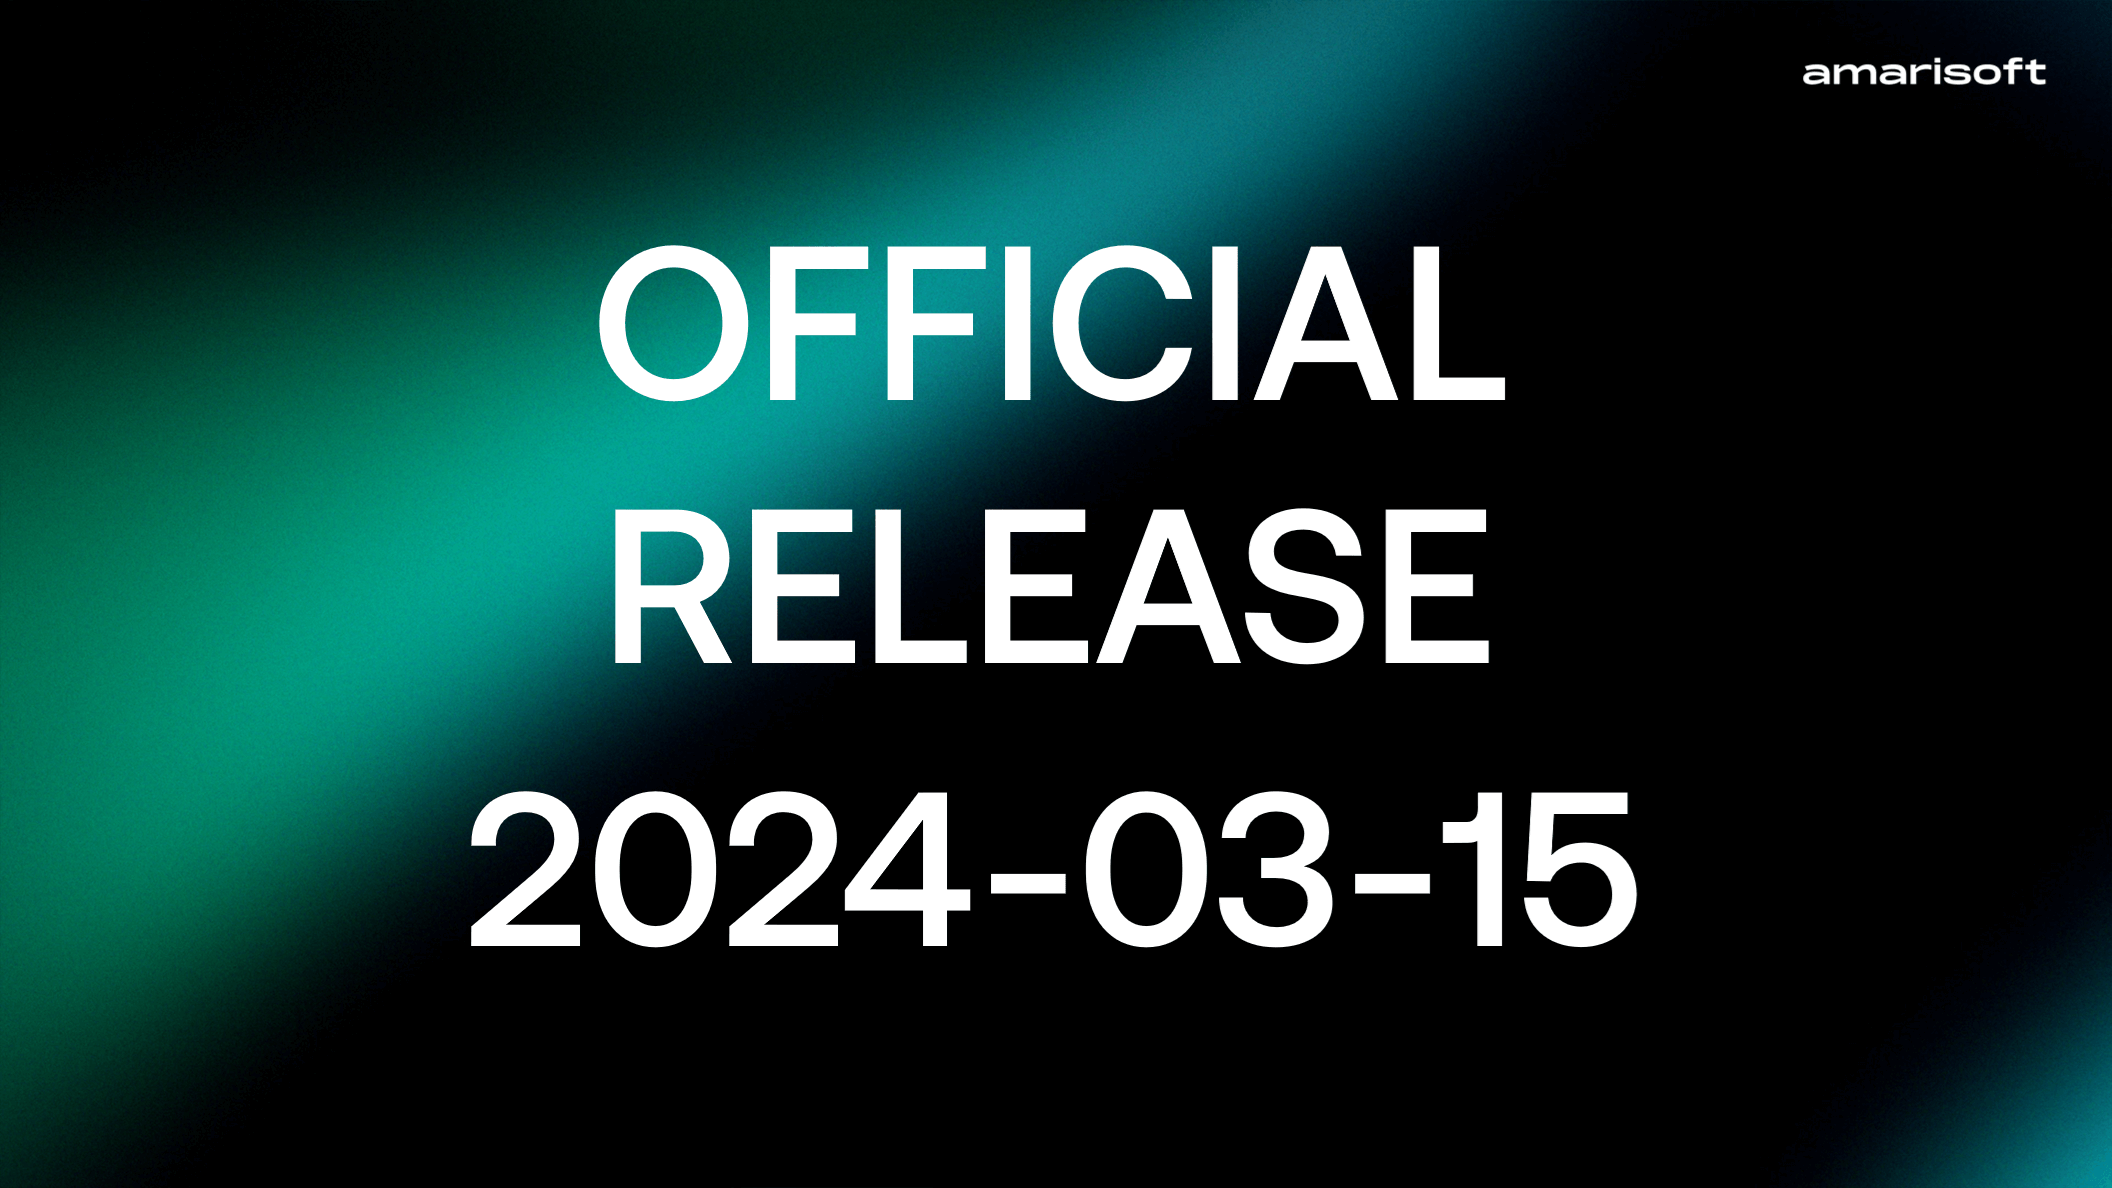 Amarisoft Official Release 2024-03-15